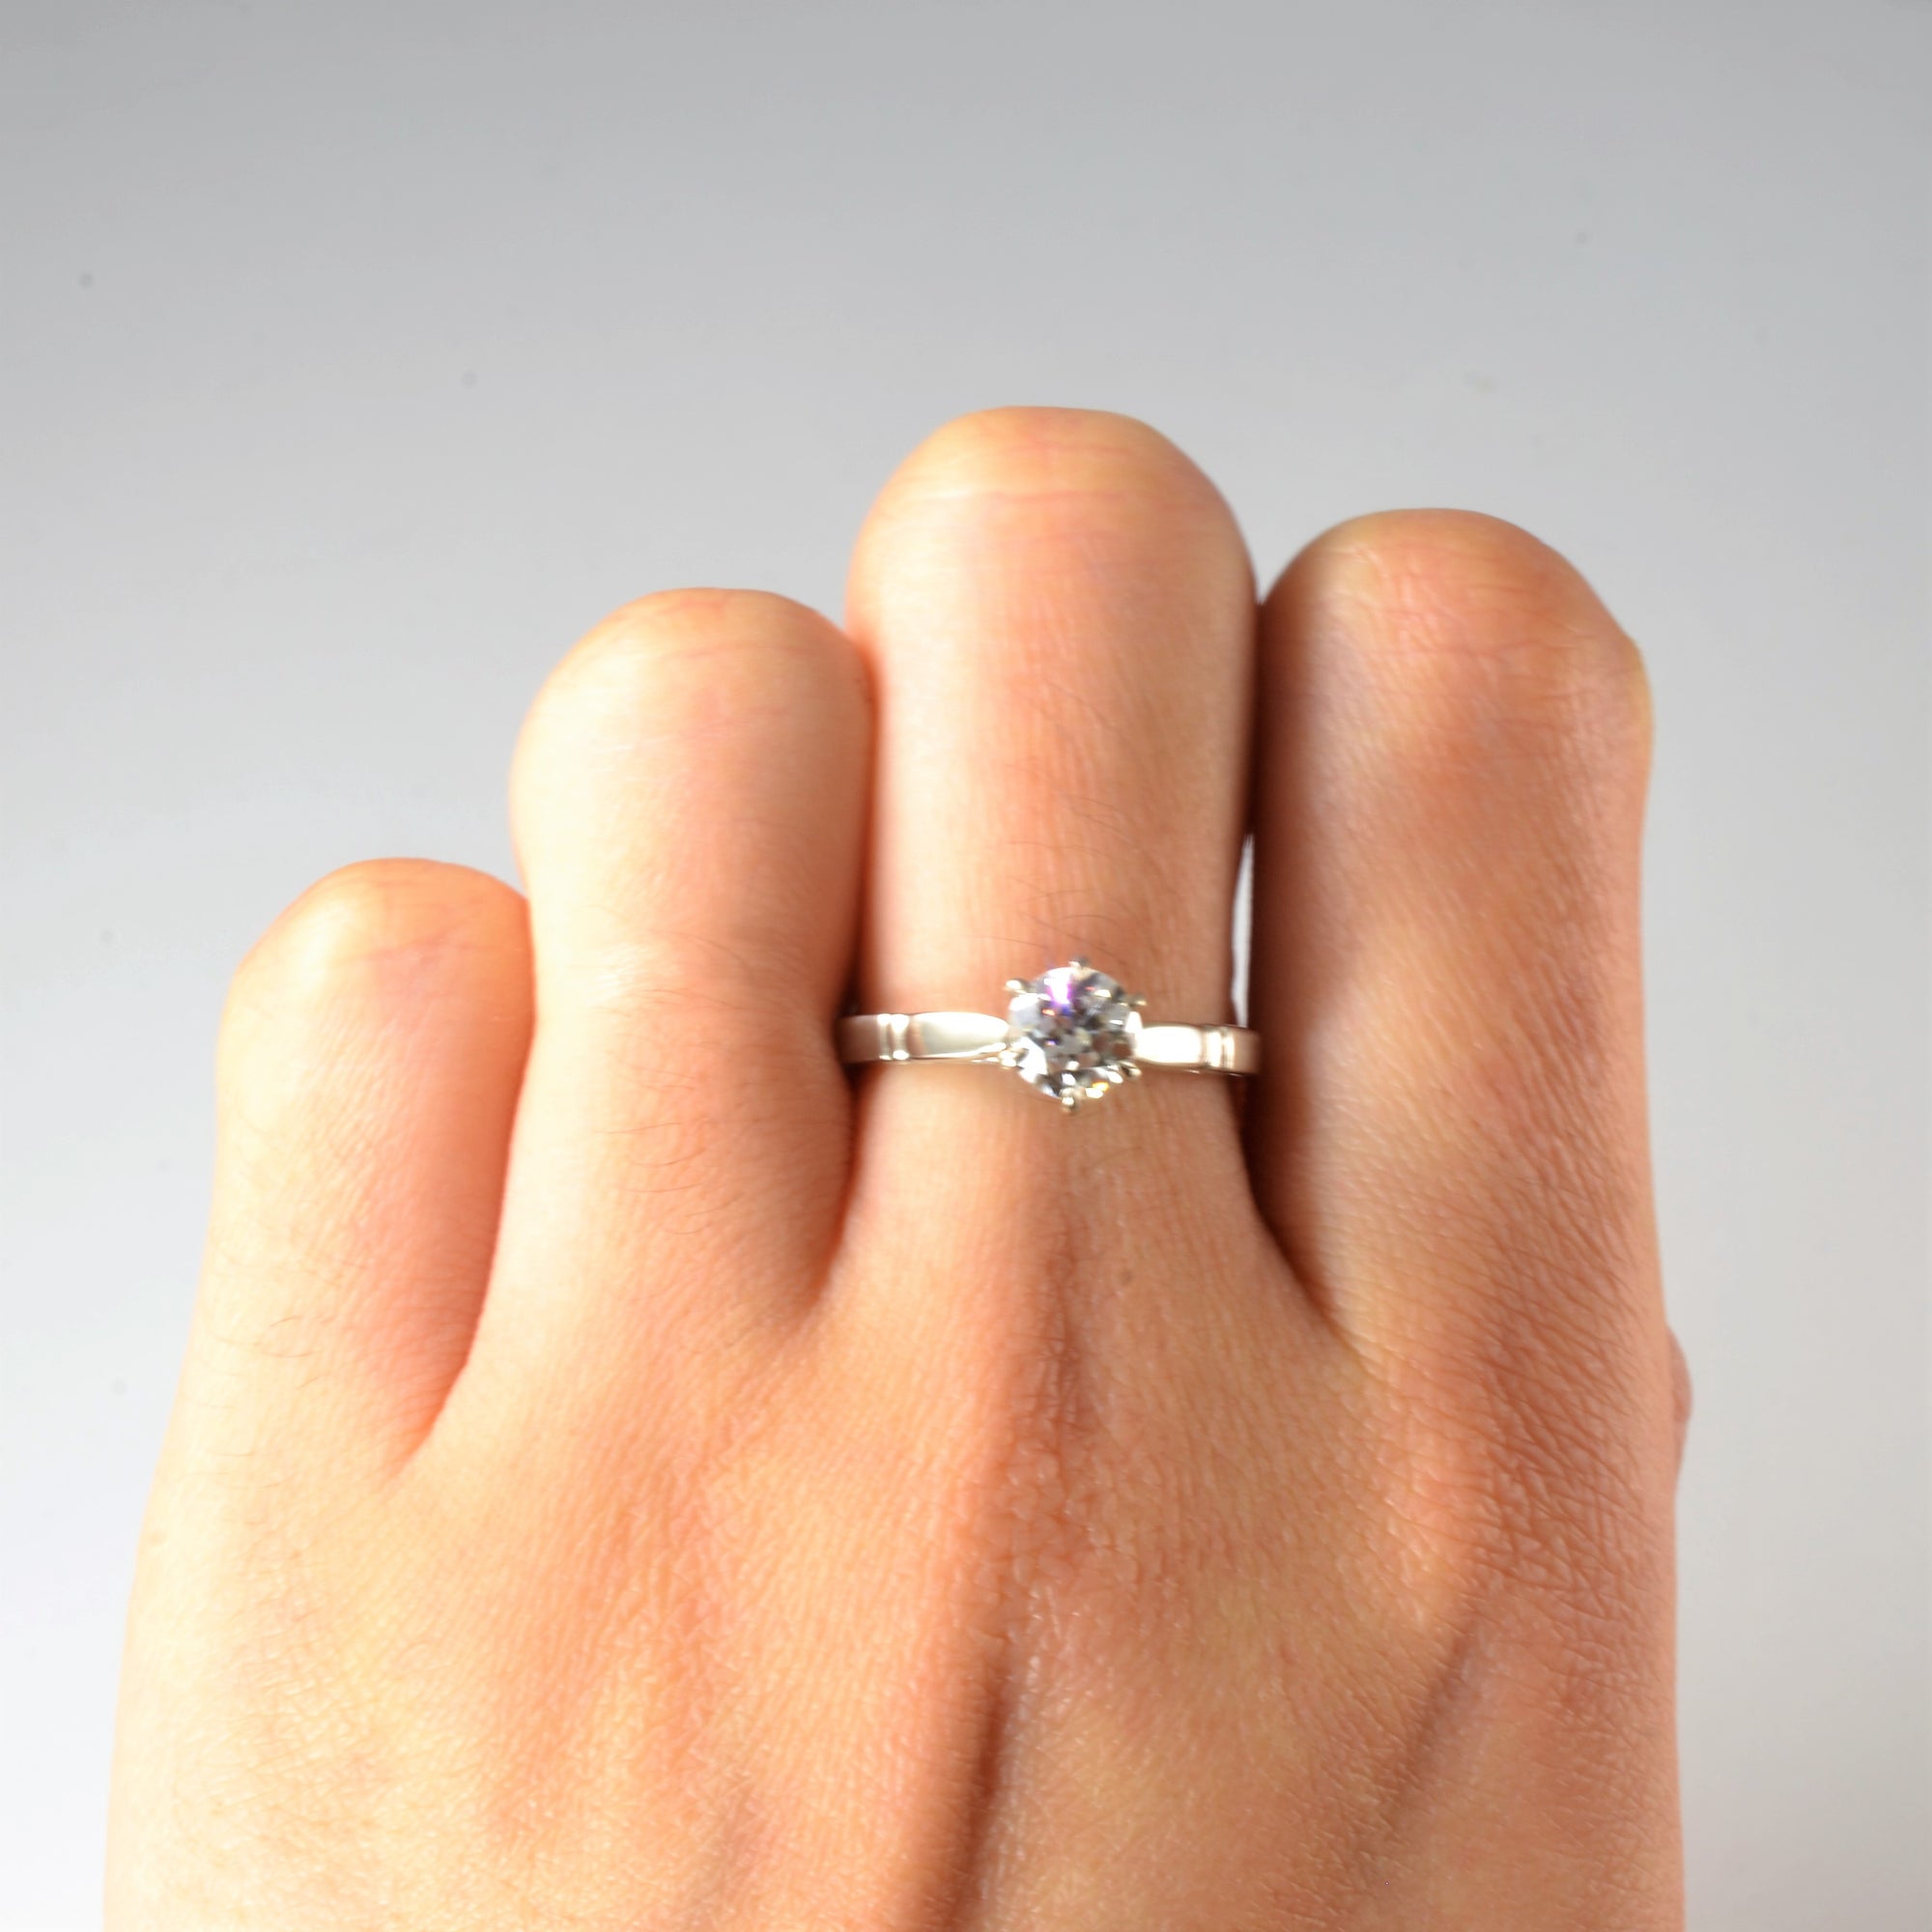 Art Deco Era Old European Diamond Engagement Ring | 0.71ct | SZ 6.5 |